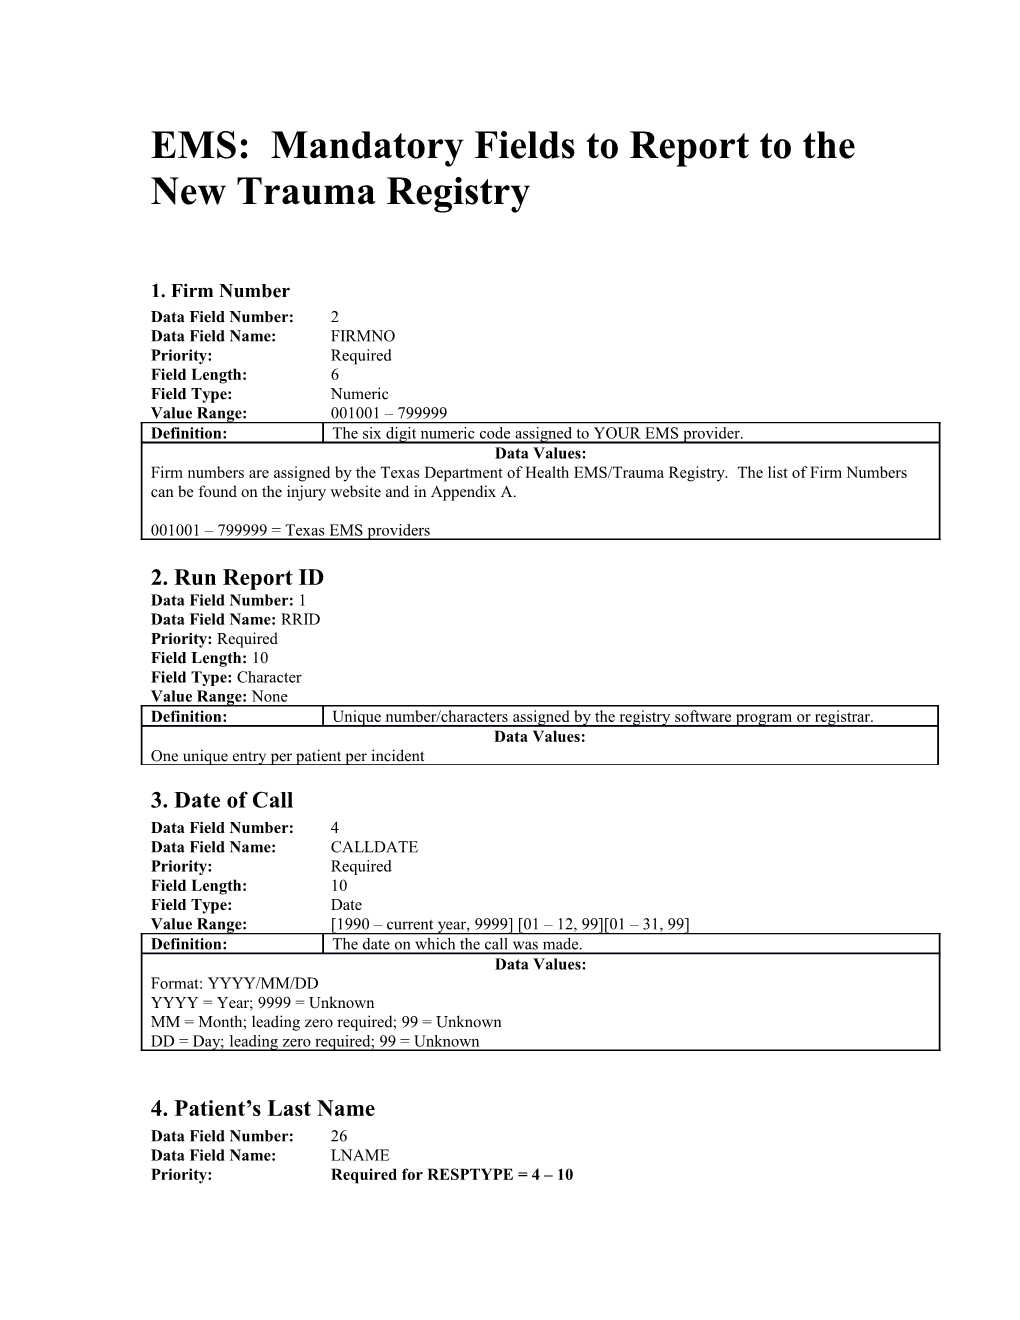 EMS: Mandatory Fields to Report to the New Trauma Registry